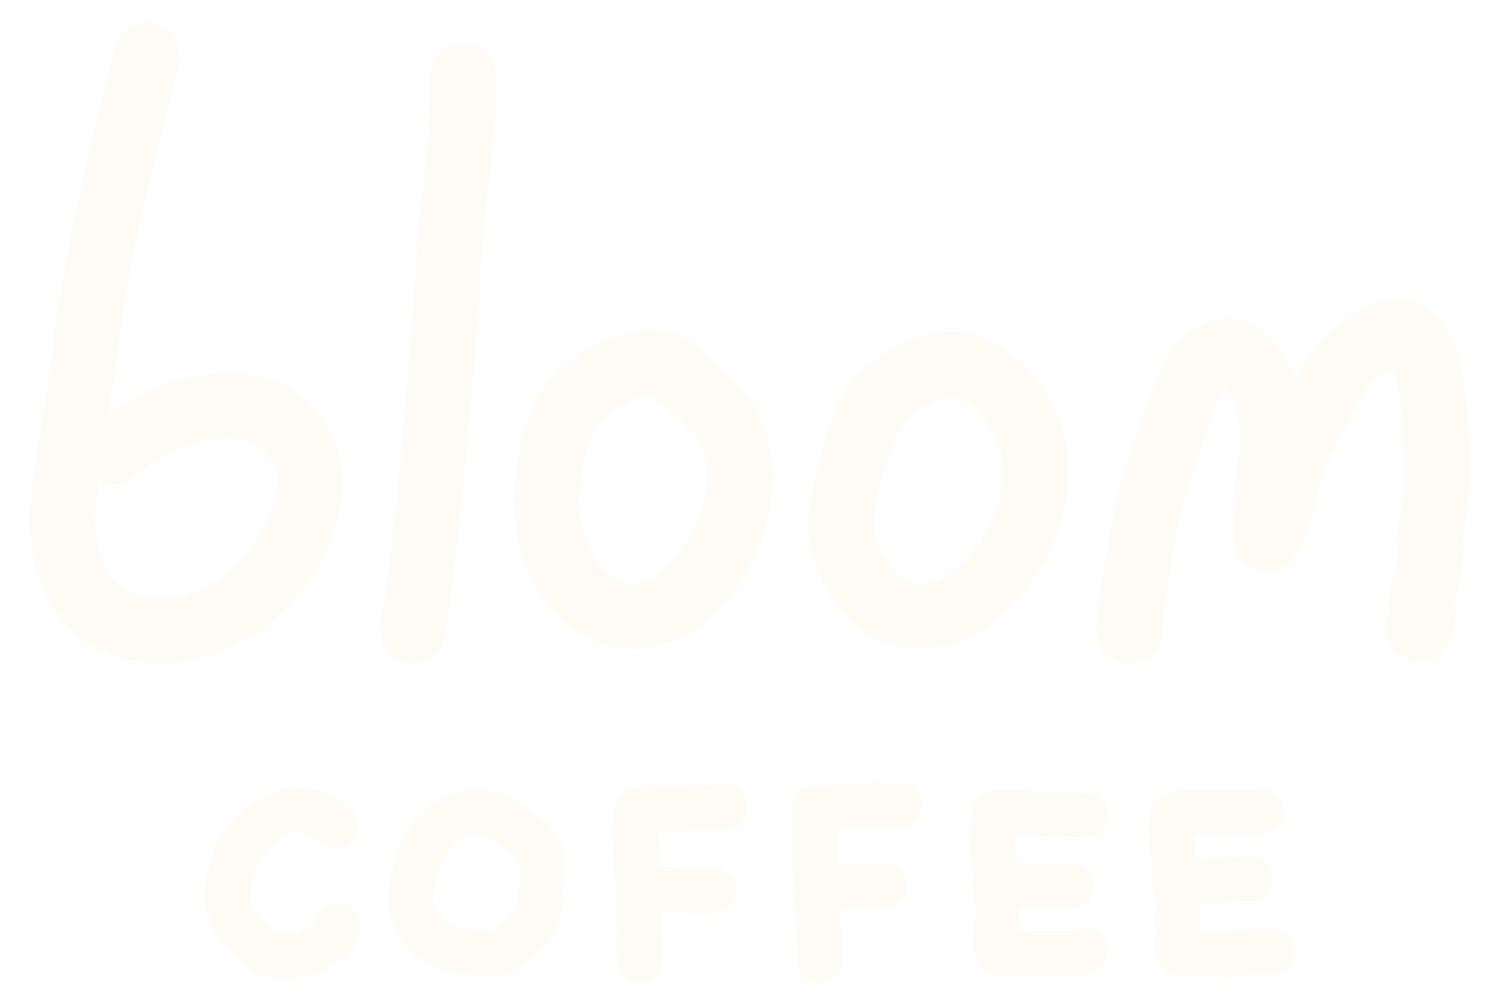 Bloom Coffee